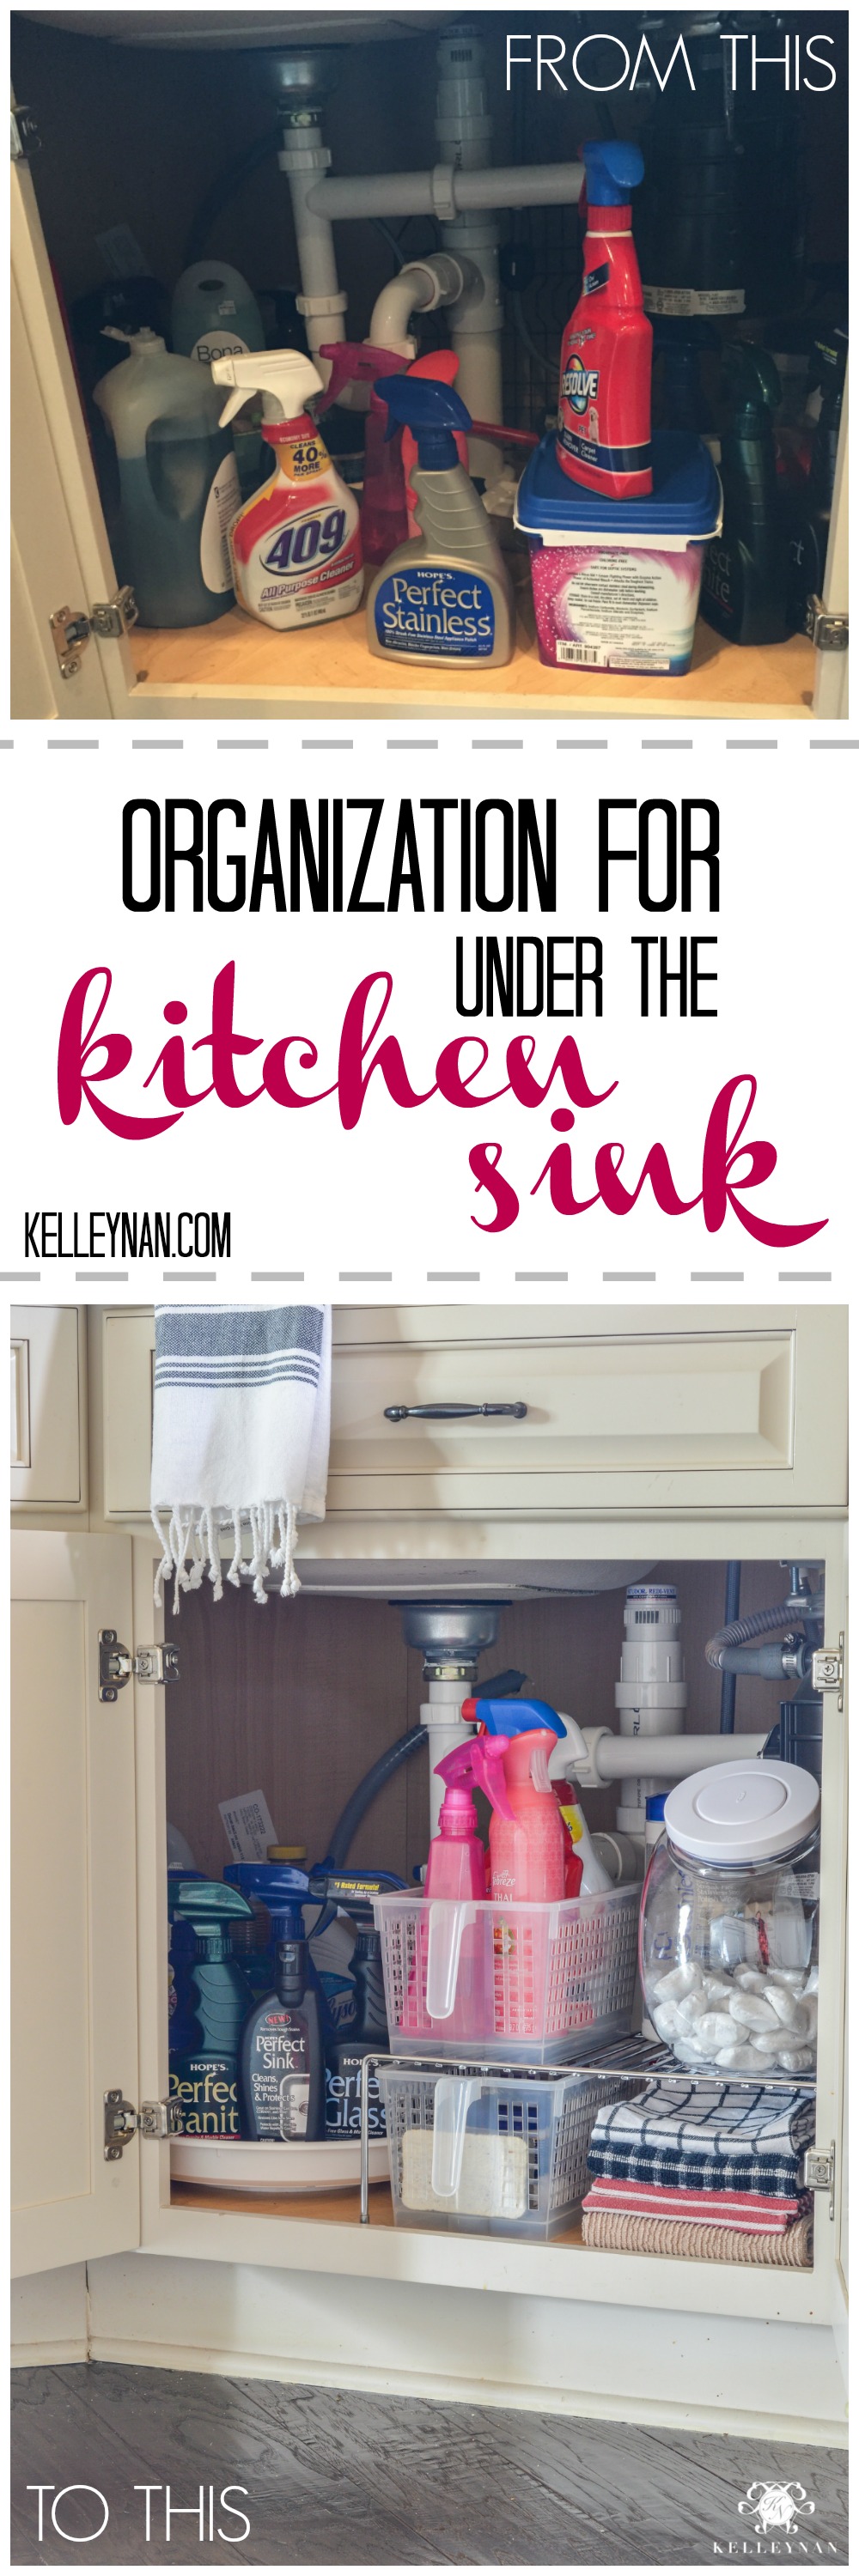 https://kelleynan.com/wp-content/uploads/2017/02/Before-and-After-Under-the-Kitchen-Sink-Organization-Makeover.jpg